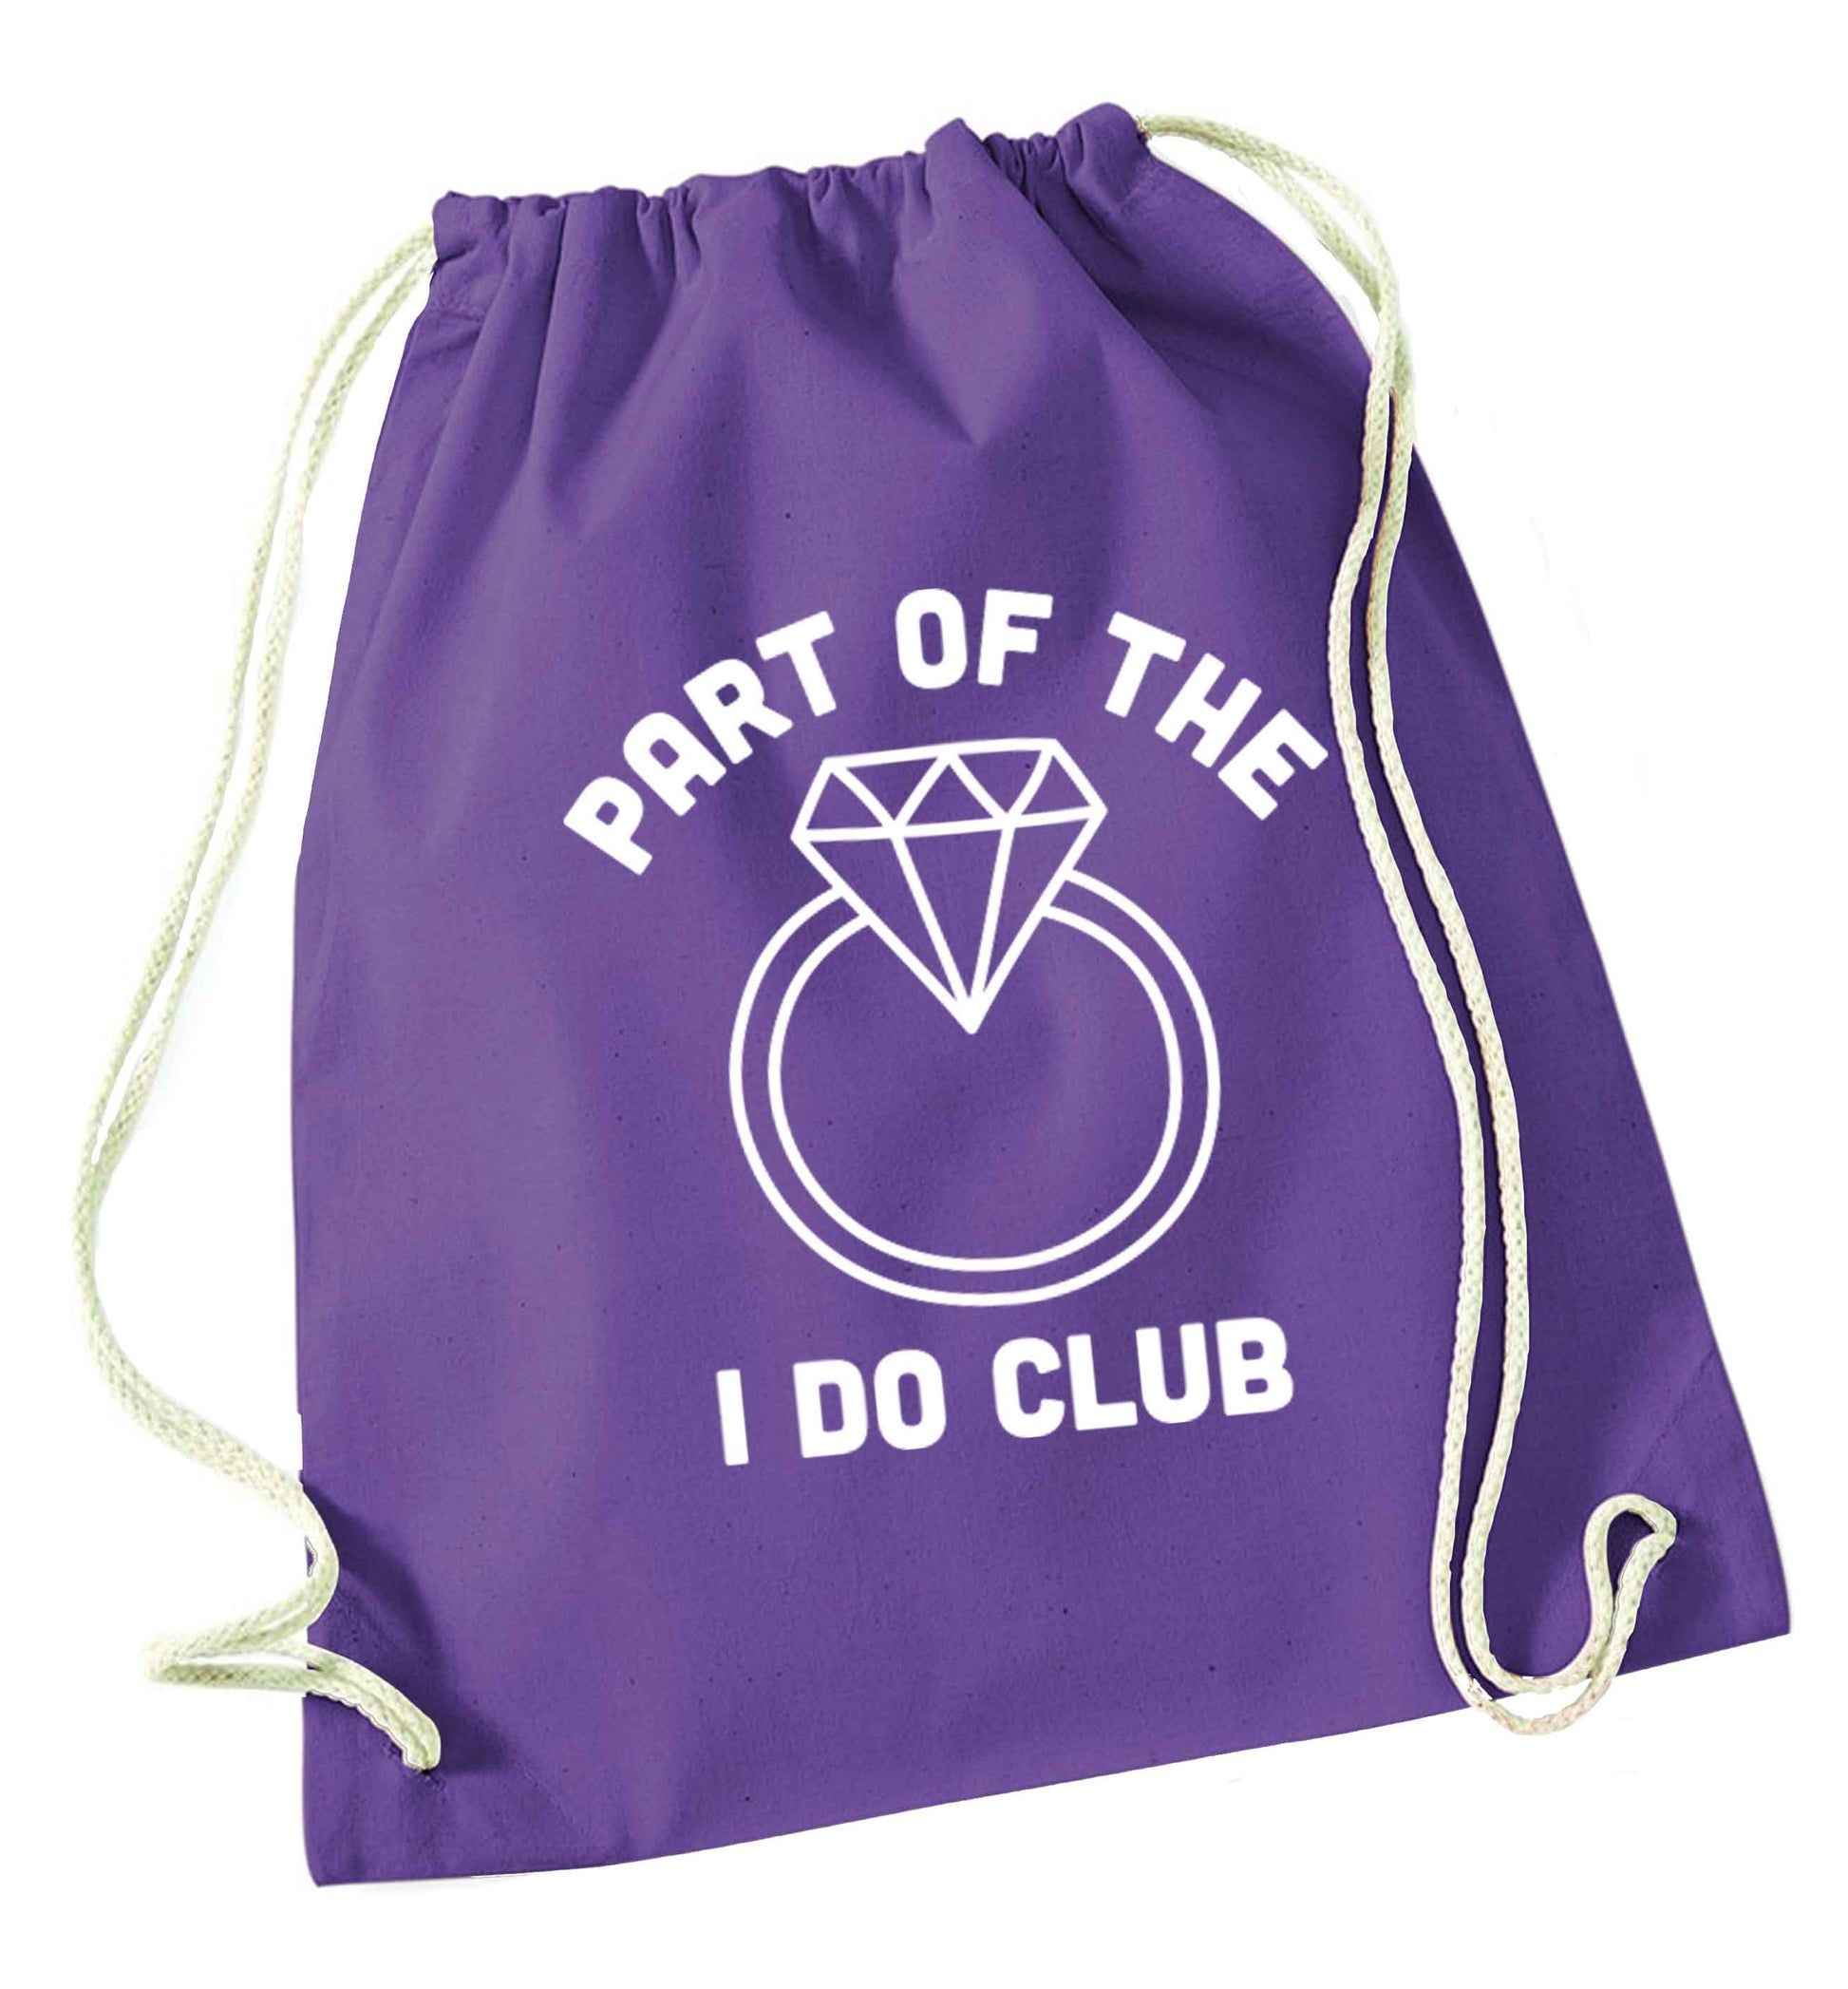 Part of the I do club purple drawstring bag